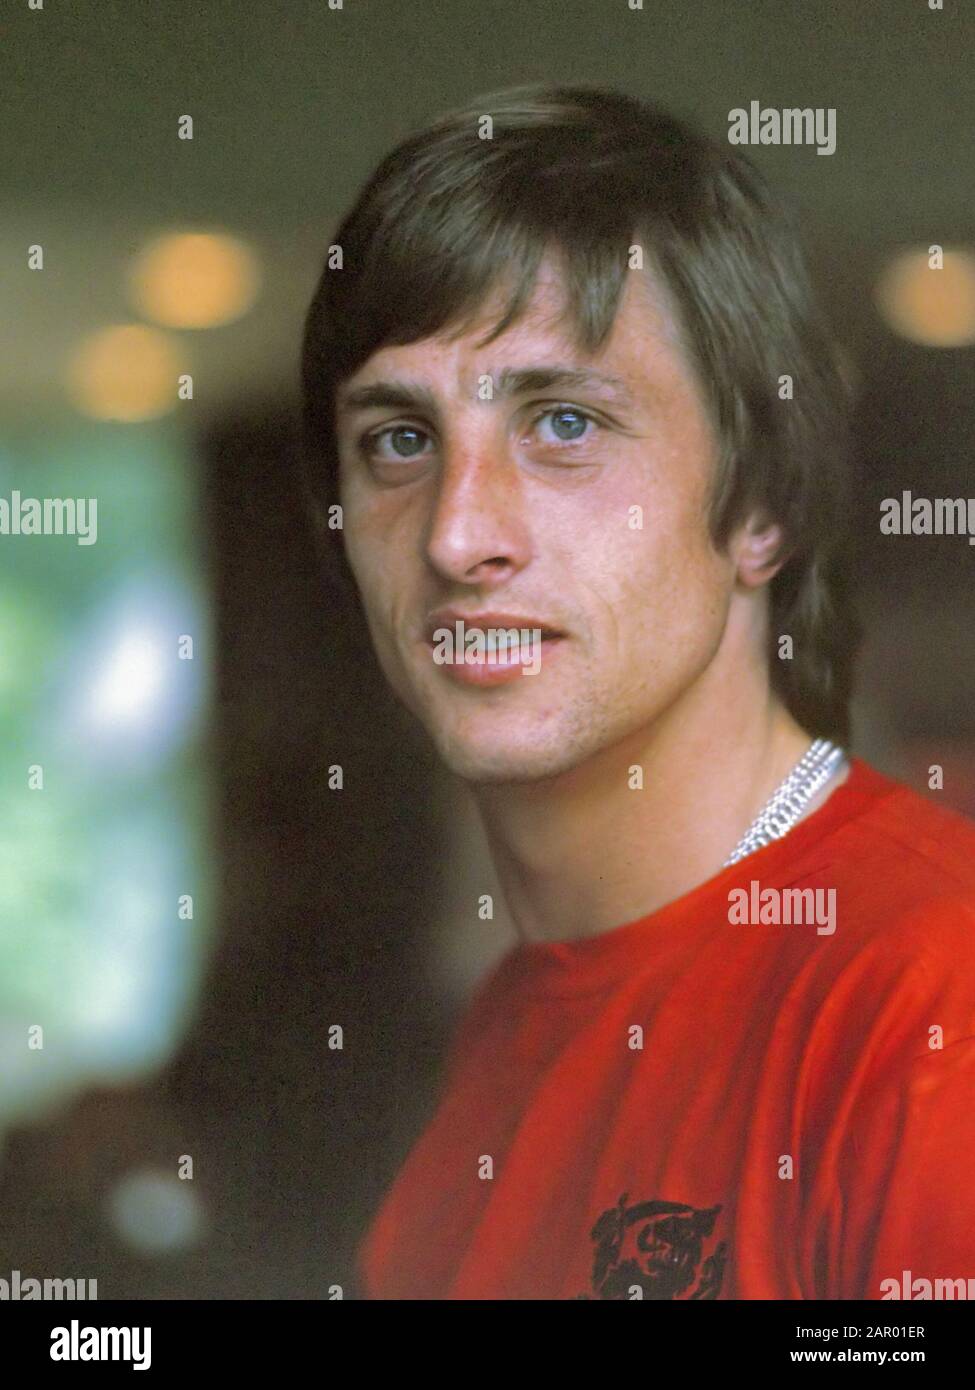 Koppen Nederlandse voetballers; Johan Cruyff 30 aprile 1974; Foto Stock